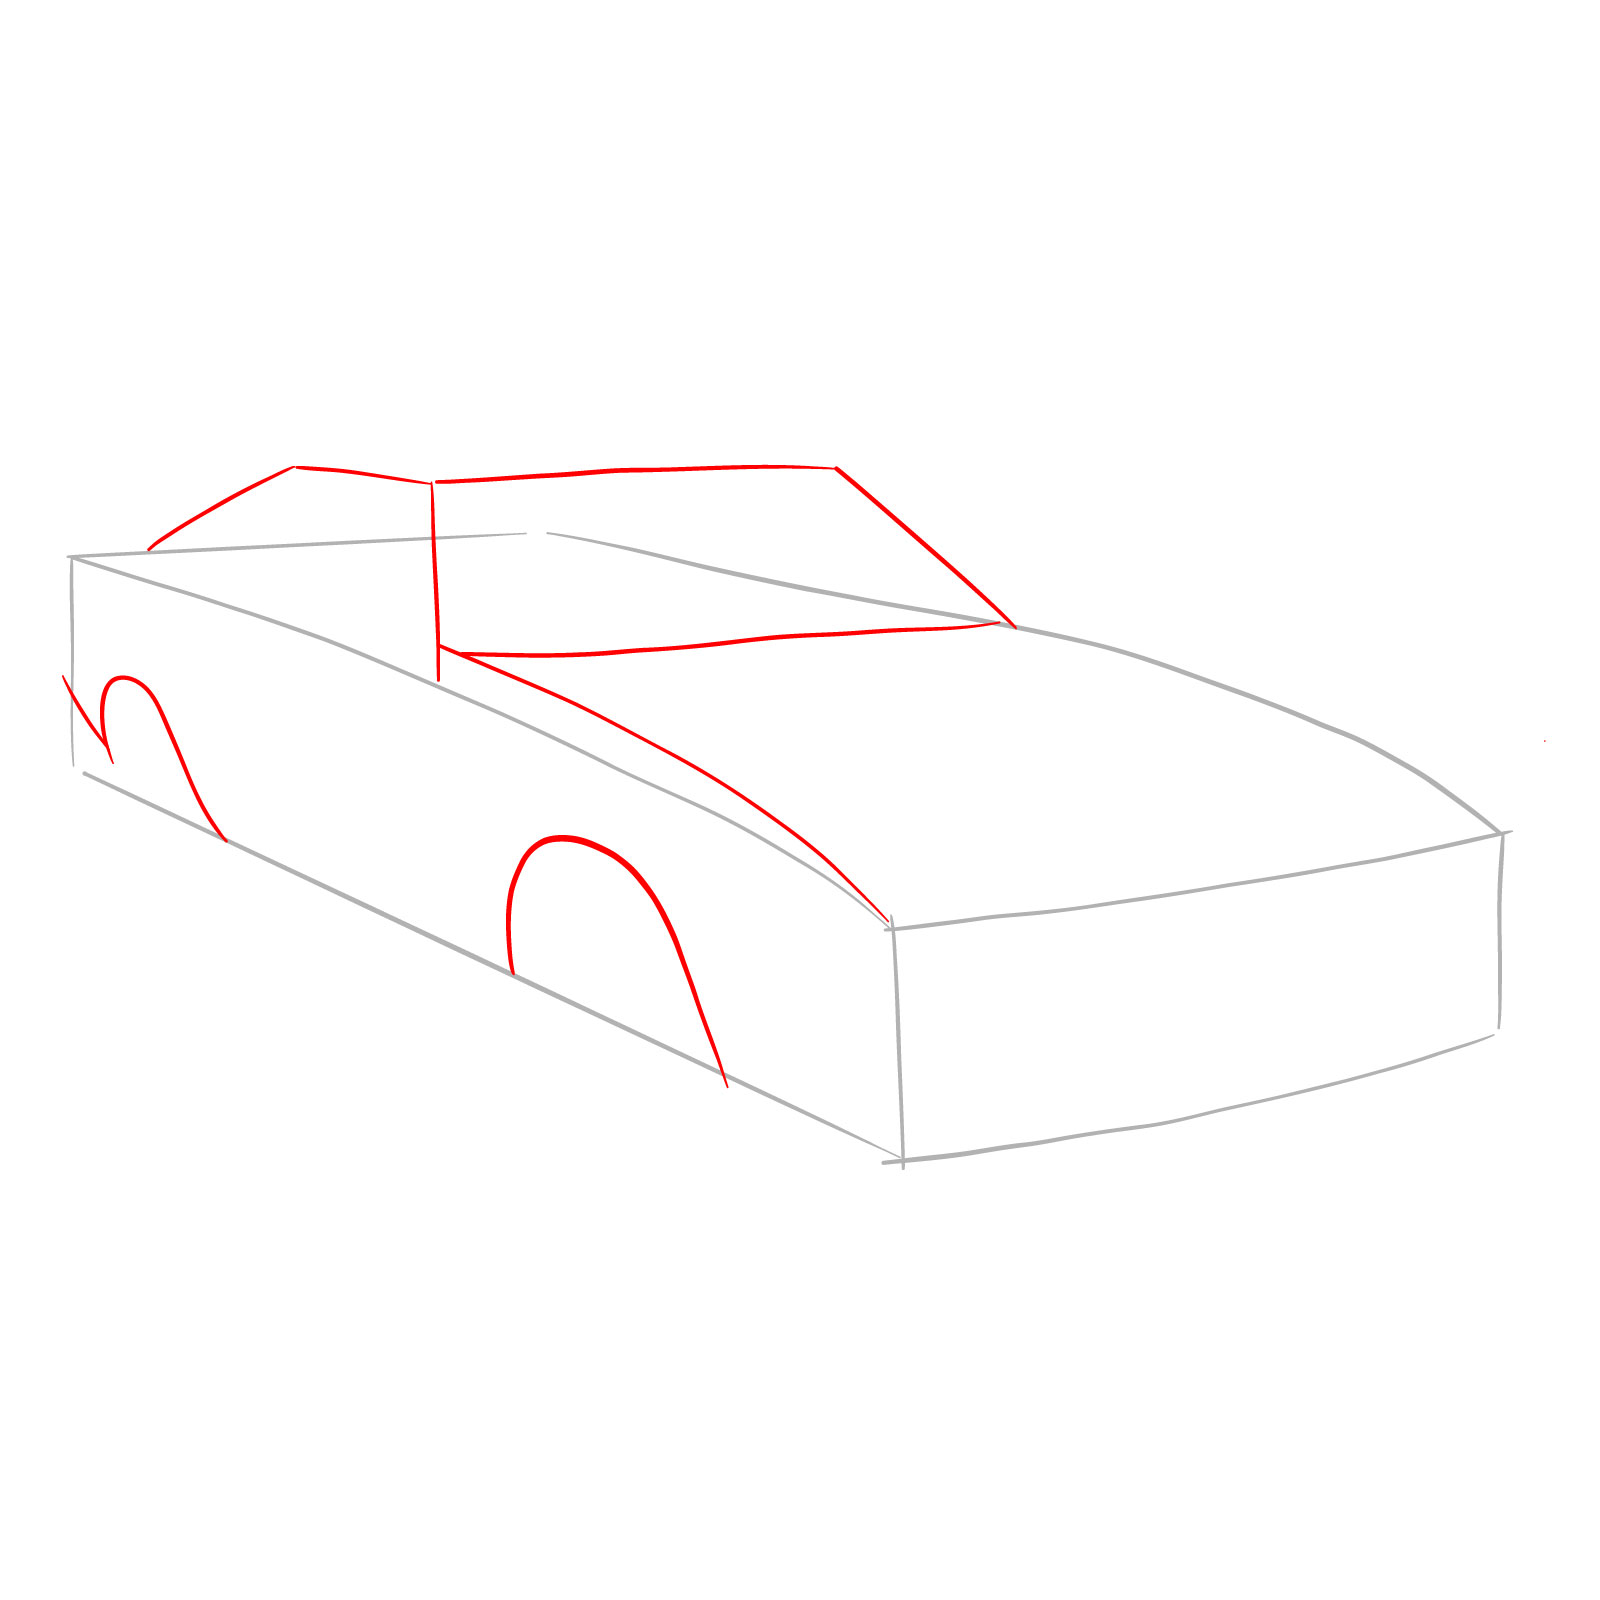 How to draw a 1985 Toyota Celica Supra P Type MK 2 - step 02